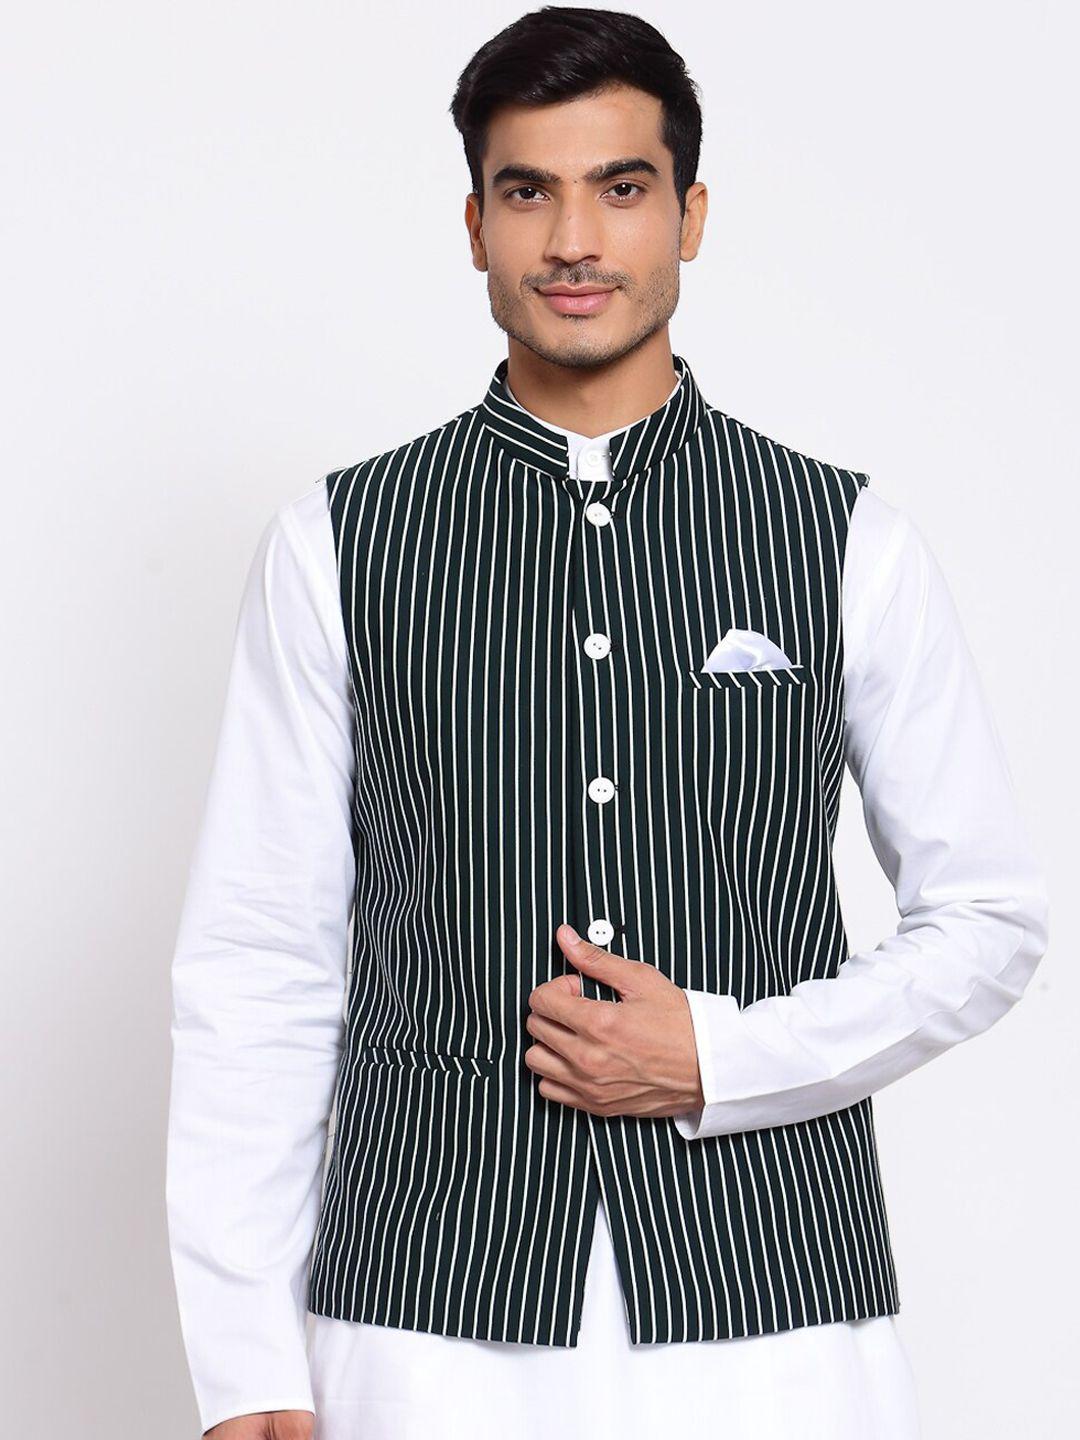 maxence nehru green & white striped jacket